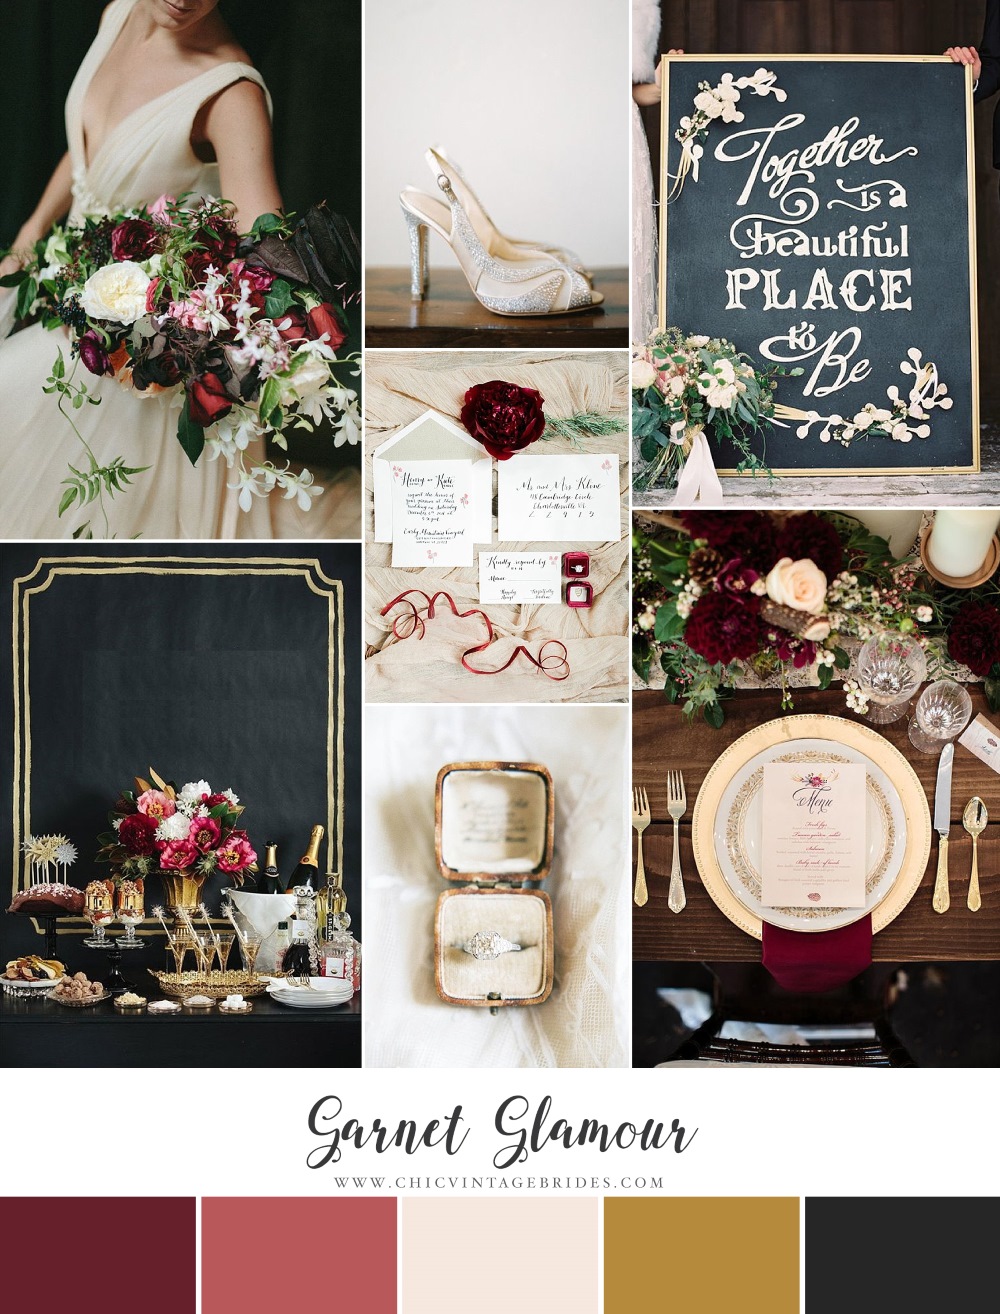 Garnet Glamour - Glittering Winter Wedding Inspiration in Garnet & Gold